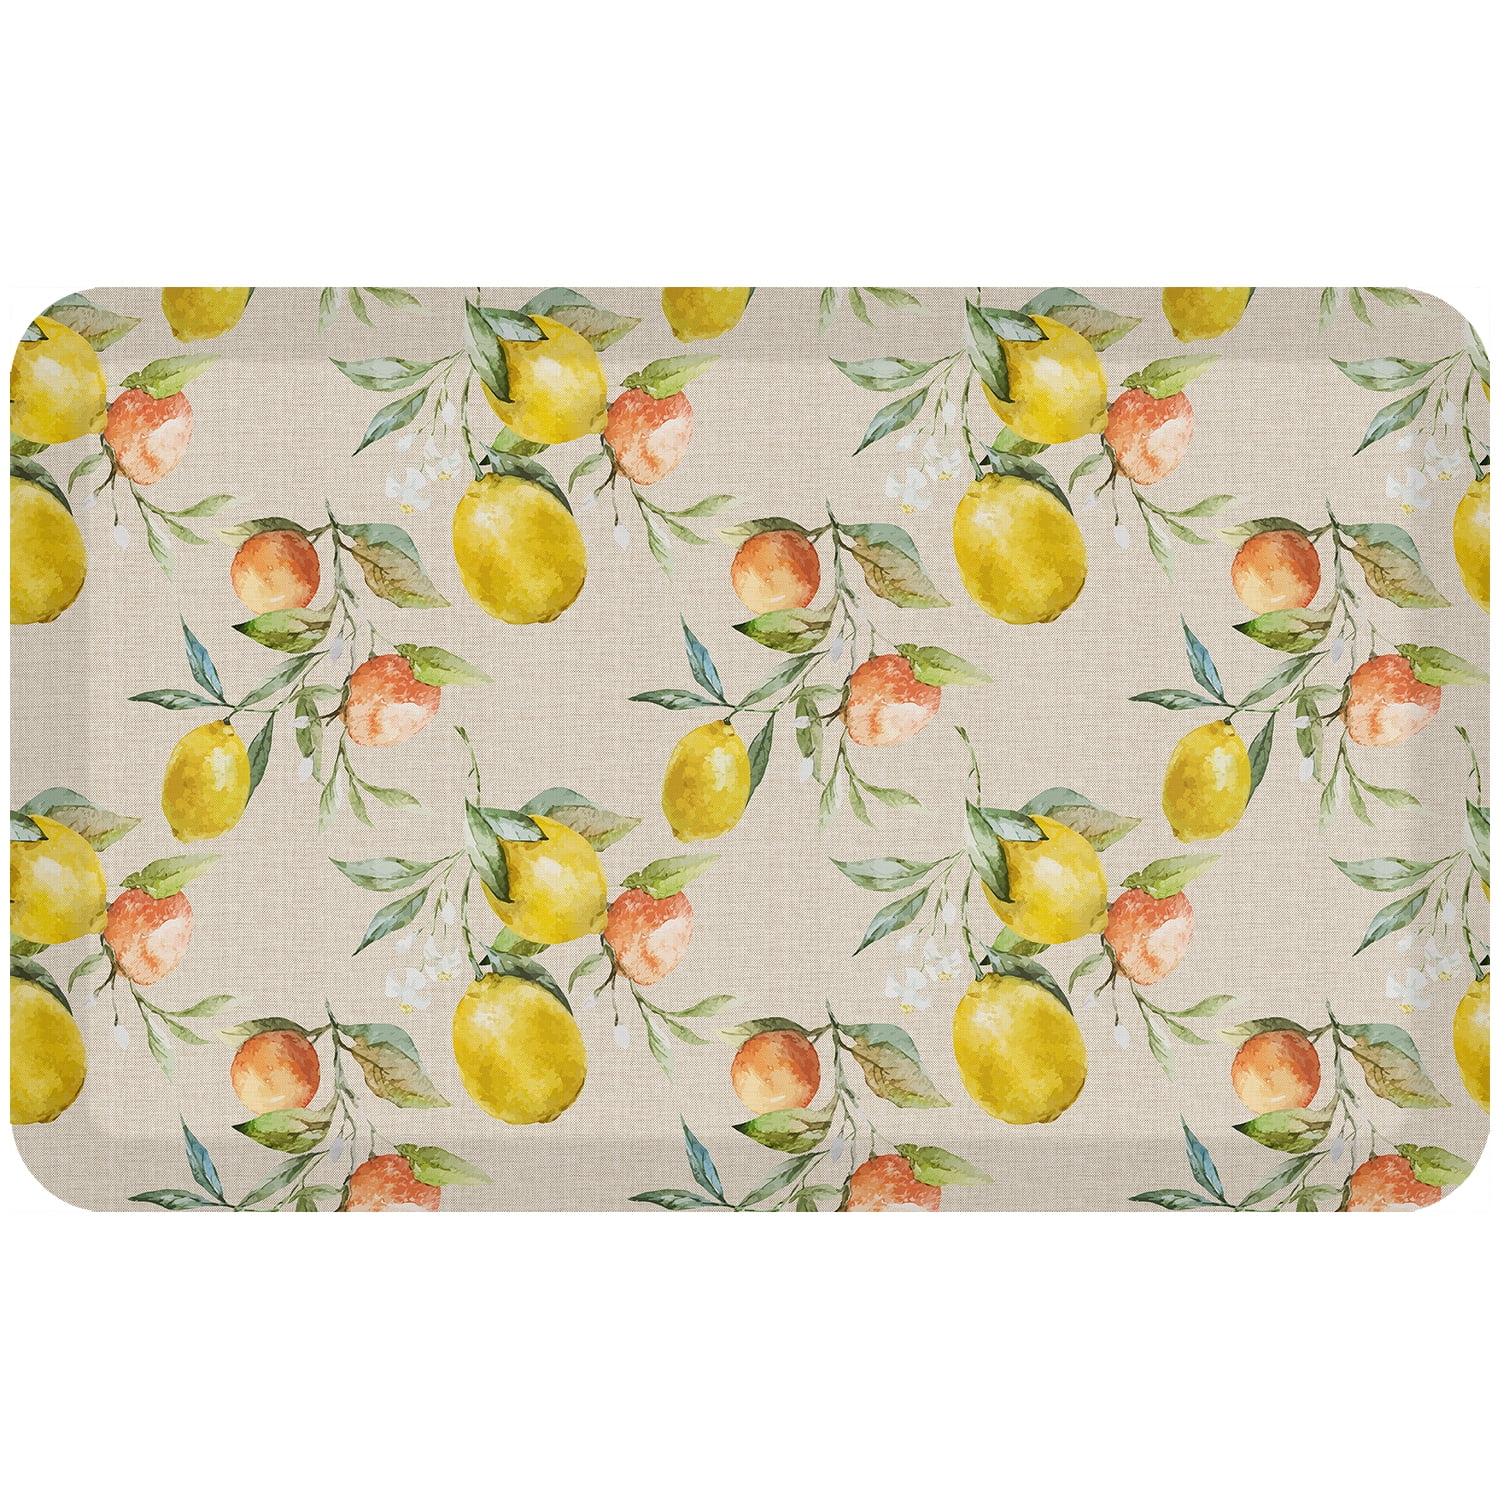 36 X 20 Pvc Fruit Slice Anti-fatigue Kitchen Floor Mat - J&v Textiles :  Target